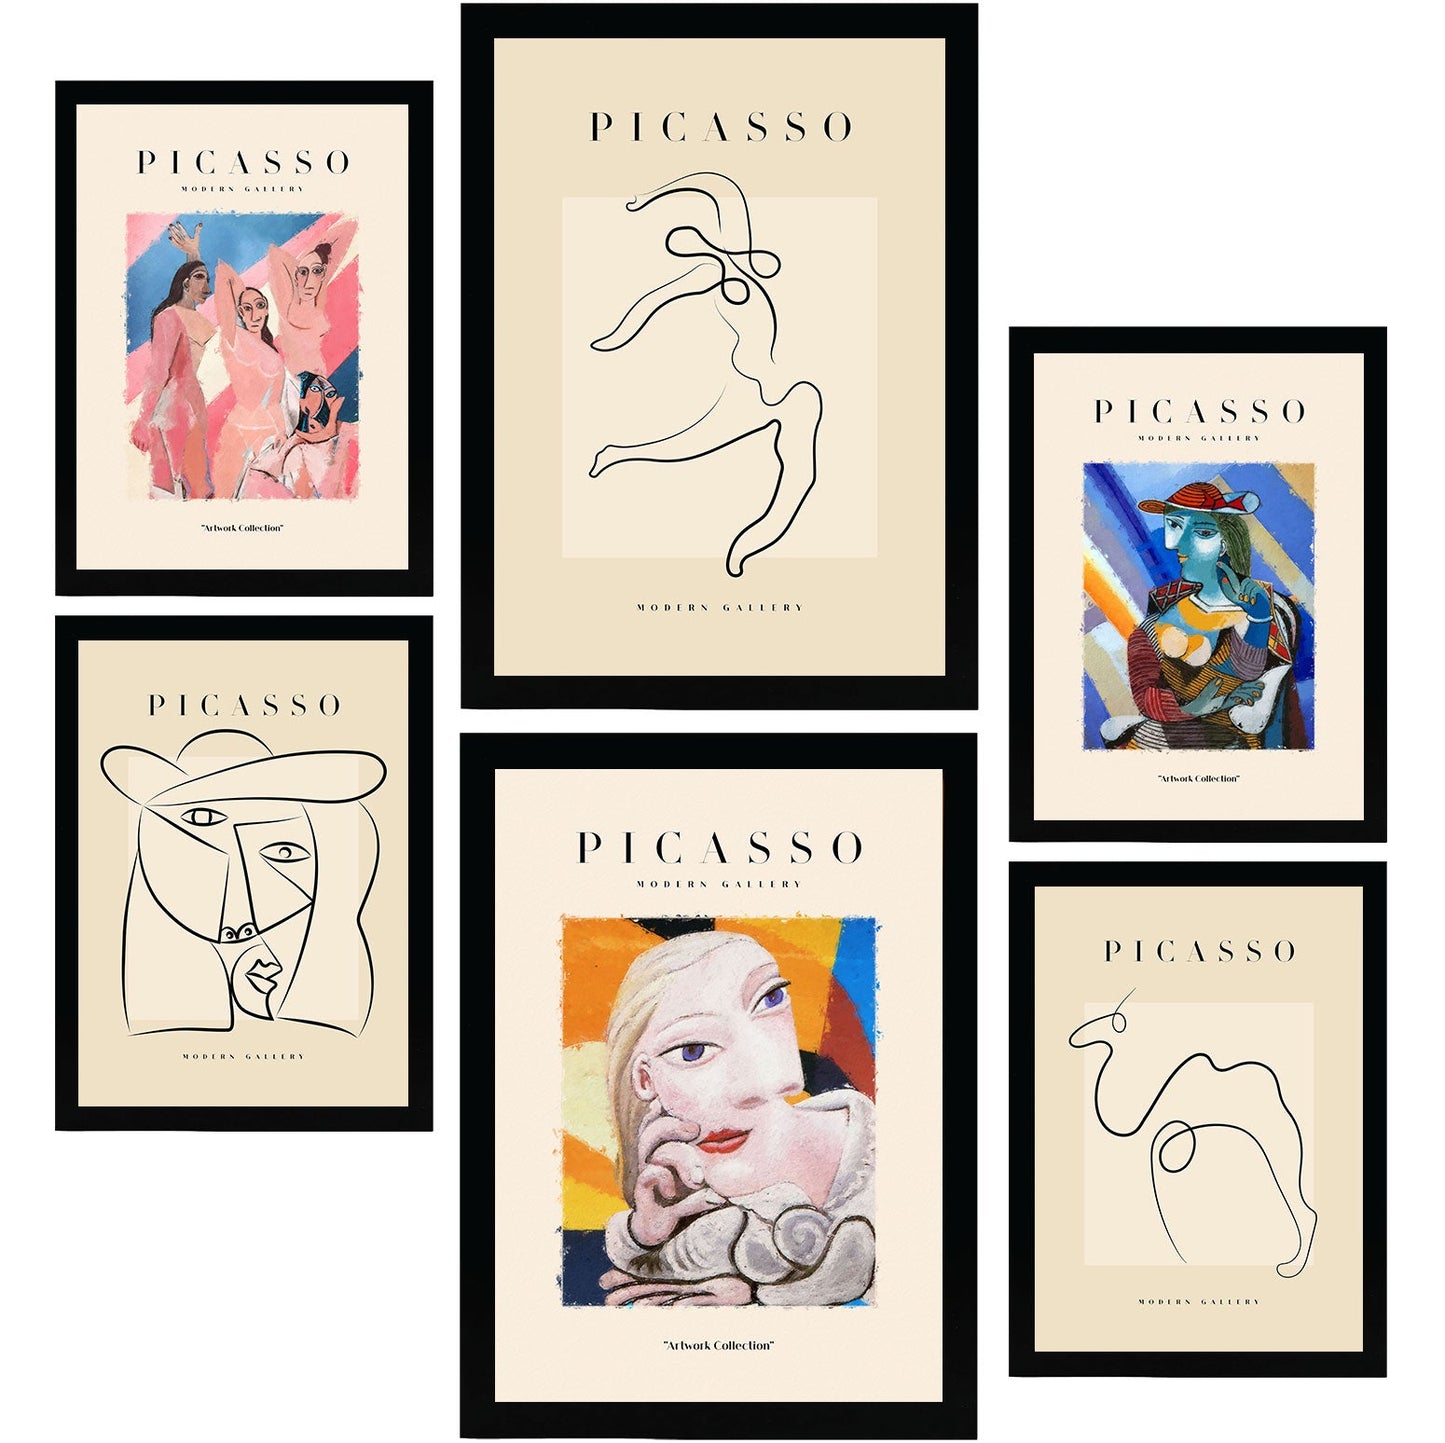 Pablo Picasso Posters. Harmony. Cubism and Surrealism Art Gallery-Artwork-Nacnic-Nacnic Estudio SL